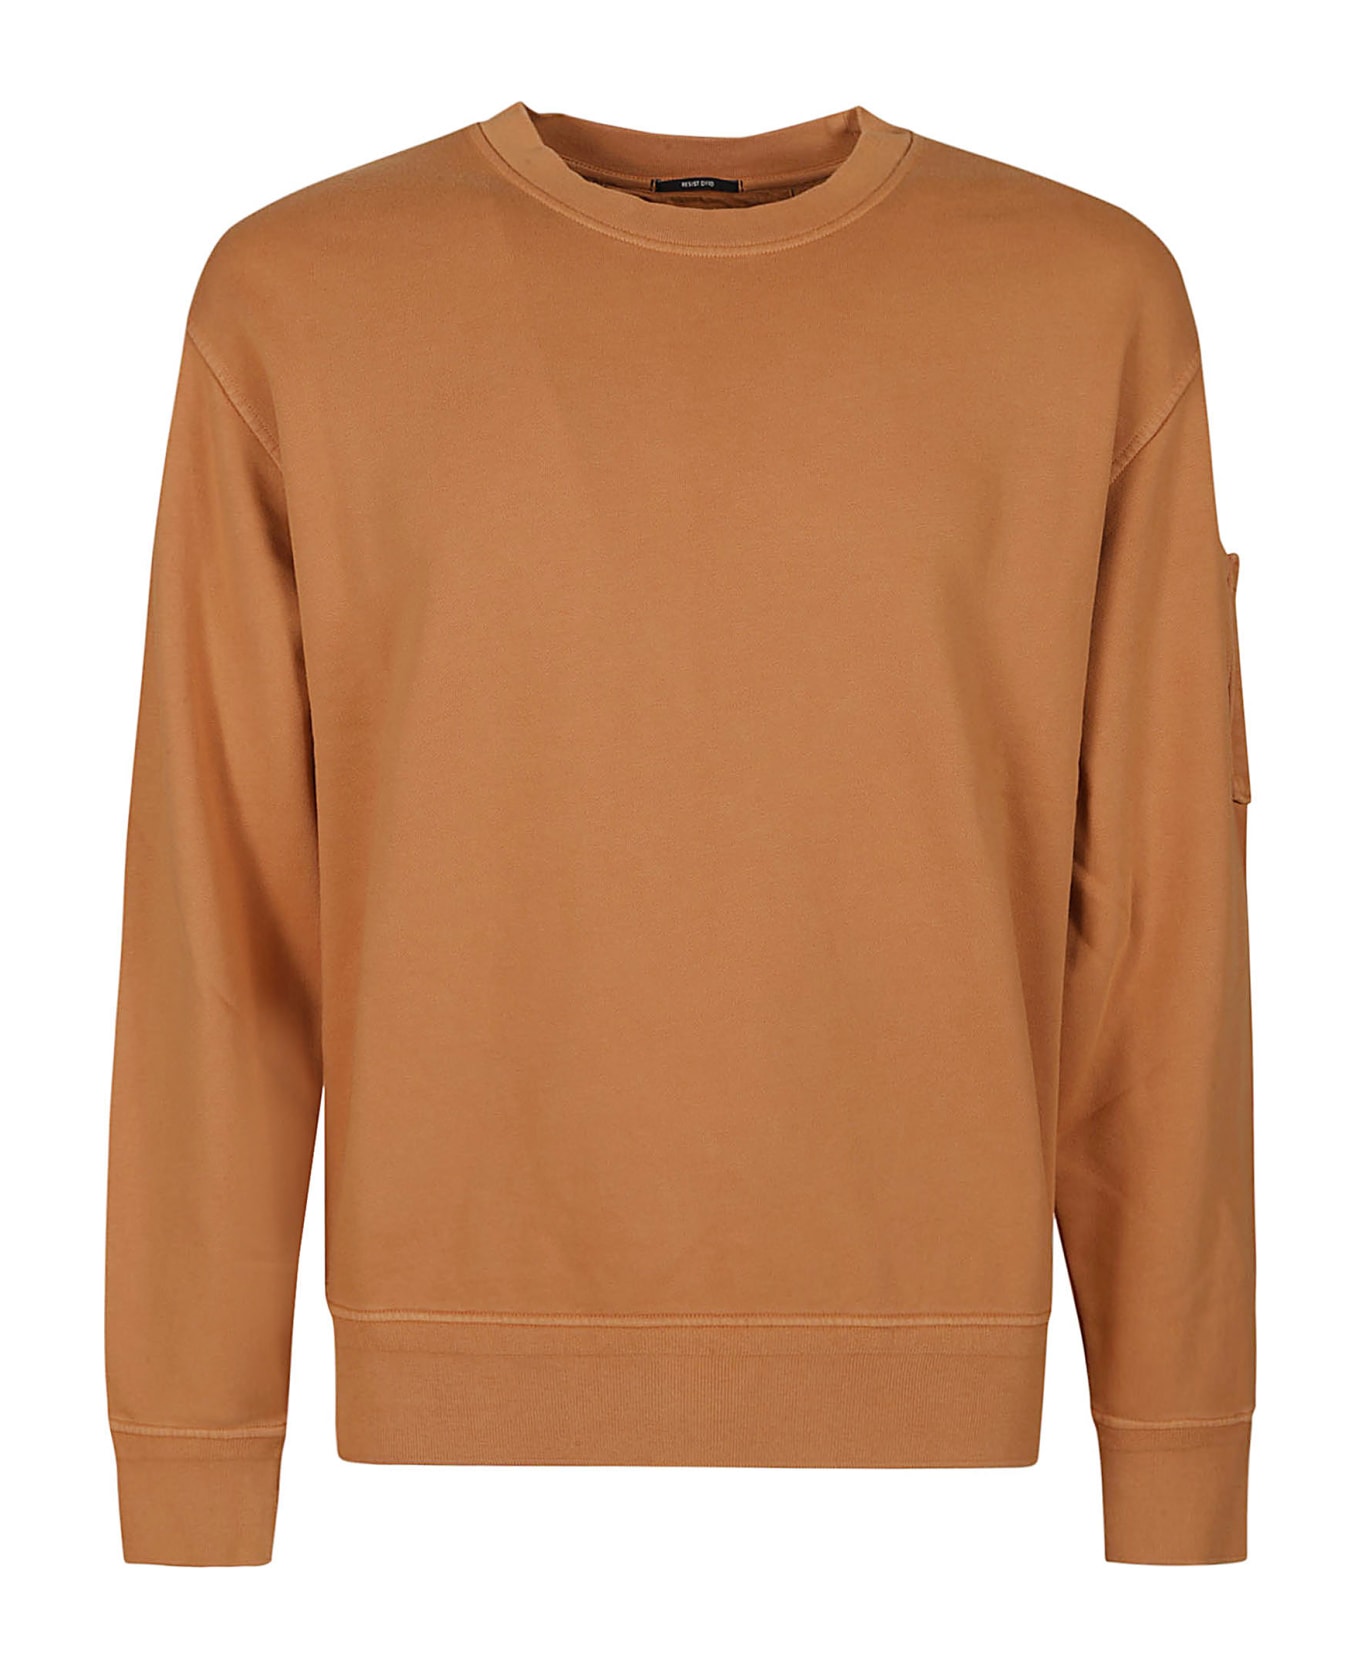 C.P. Company Diagonal Fleece Sweatshirt - PASTRY SHELL